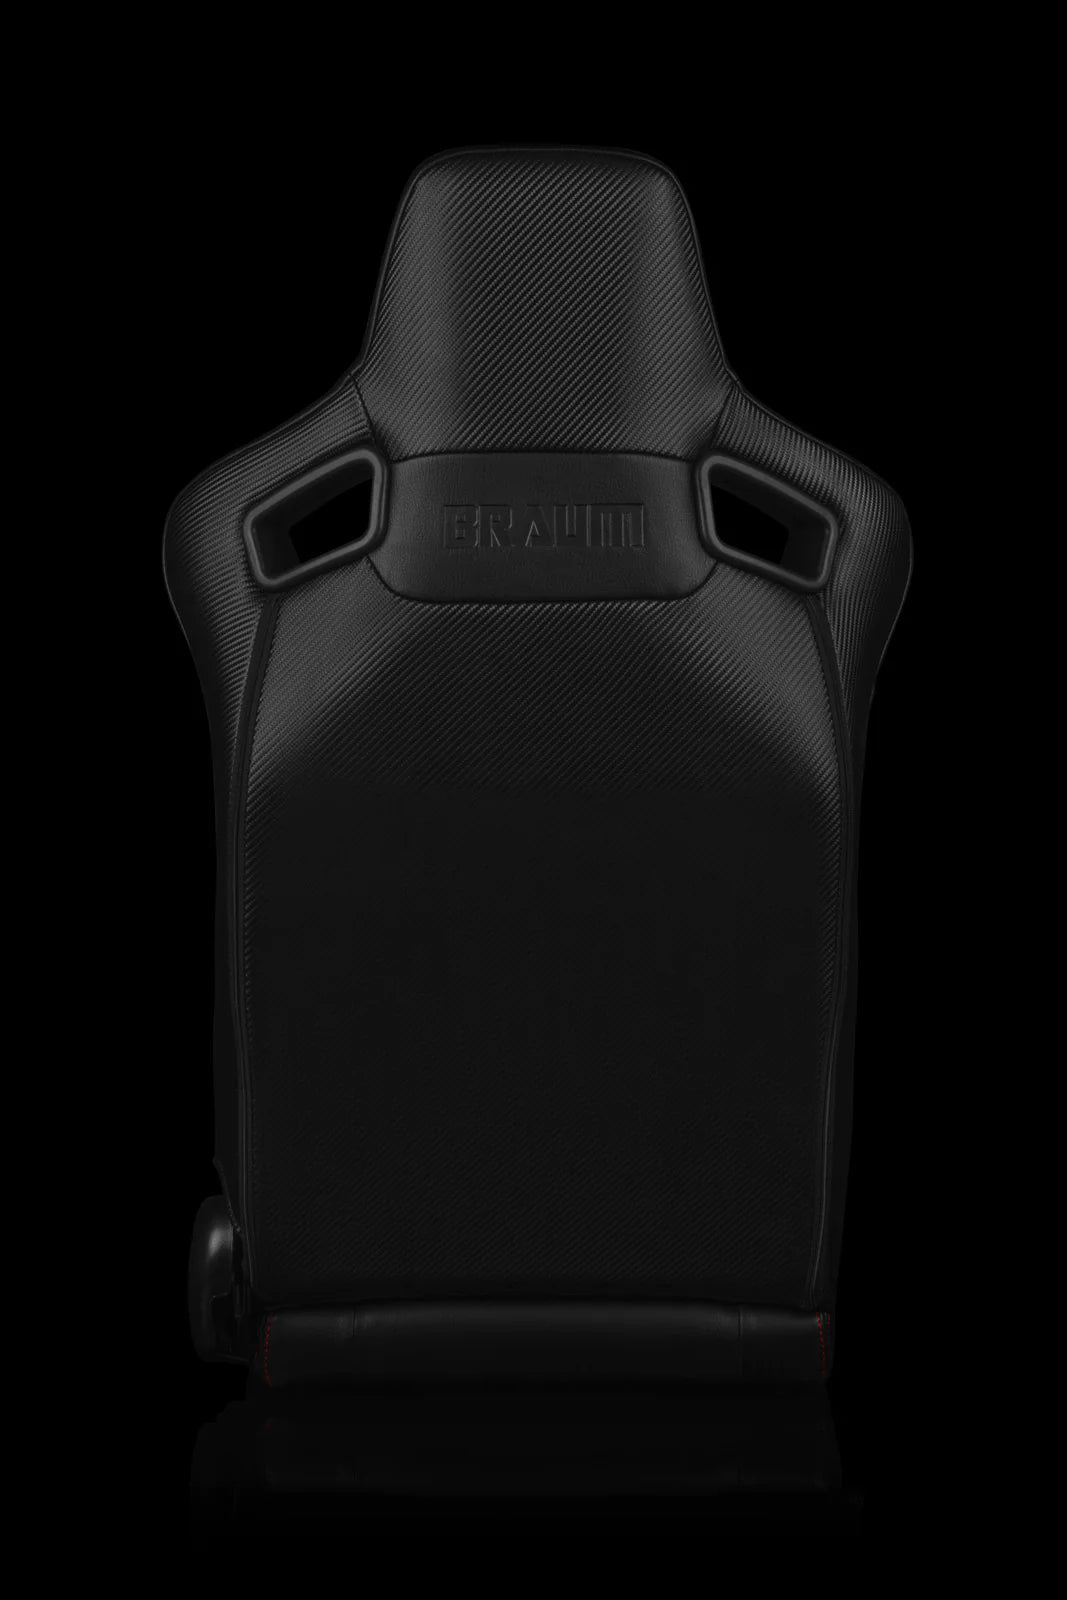 BRAUM ELITE-X Series Sport Reclinable Seats (Navy Denim | Orange Stitching) – Priced Per Pair